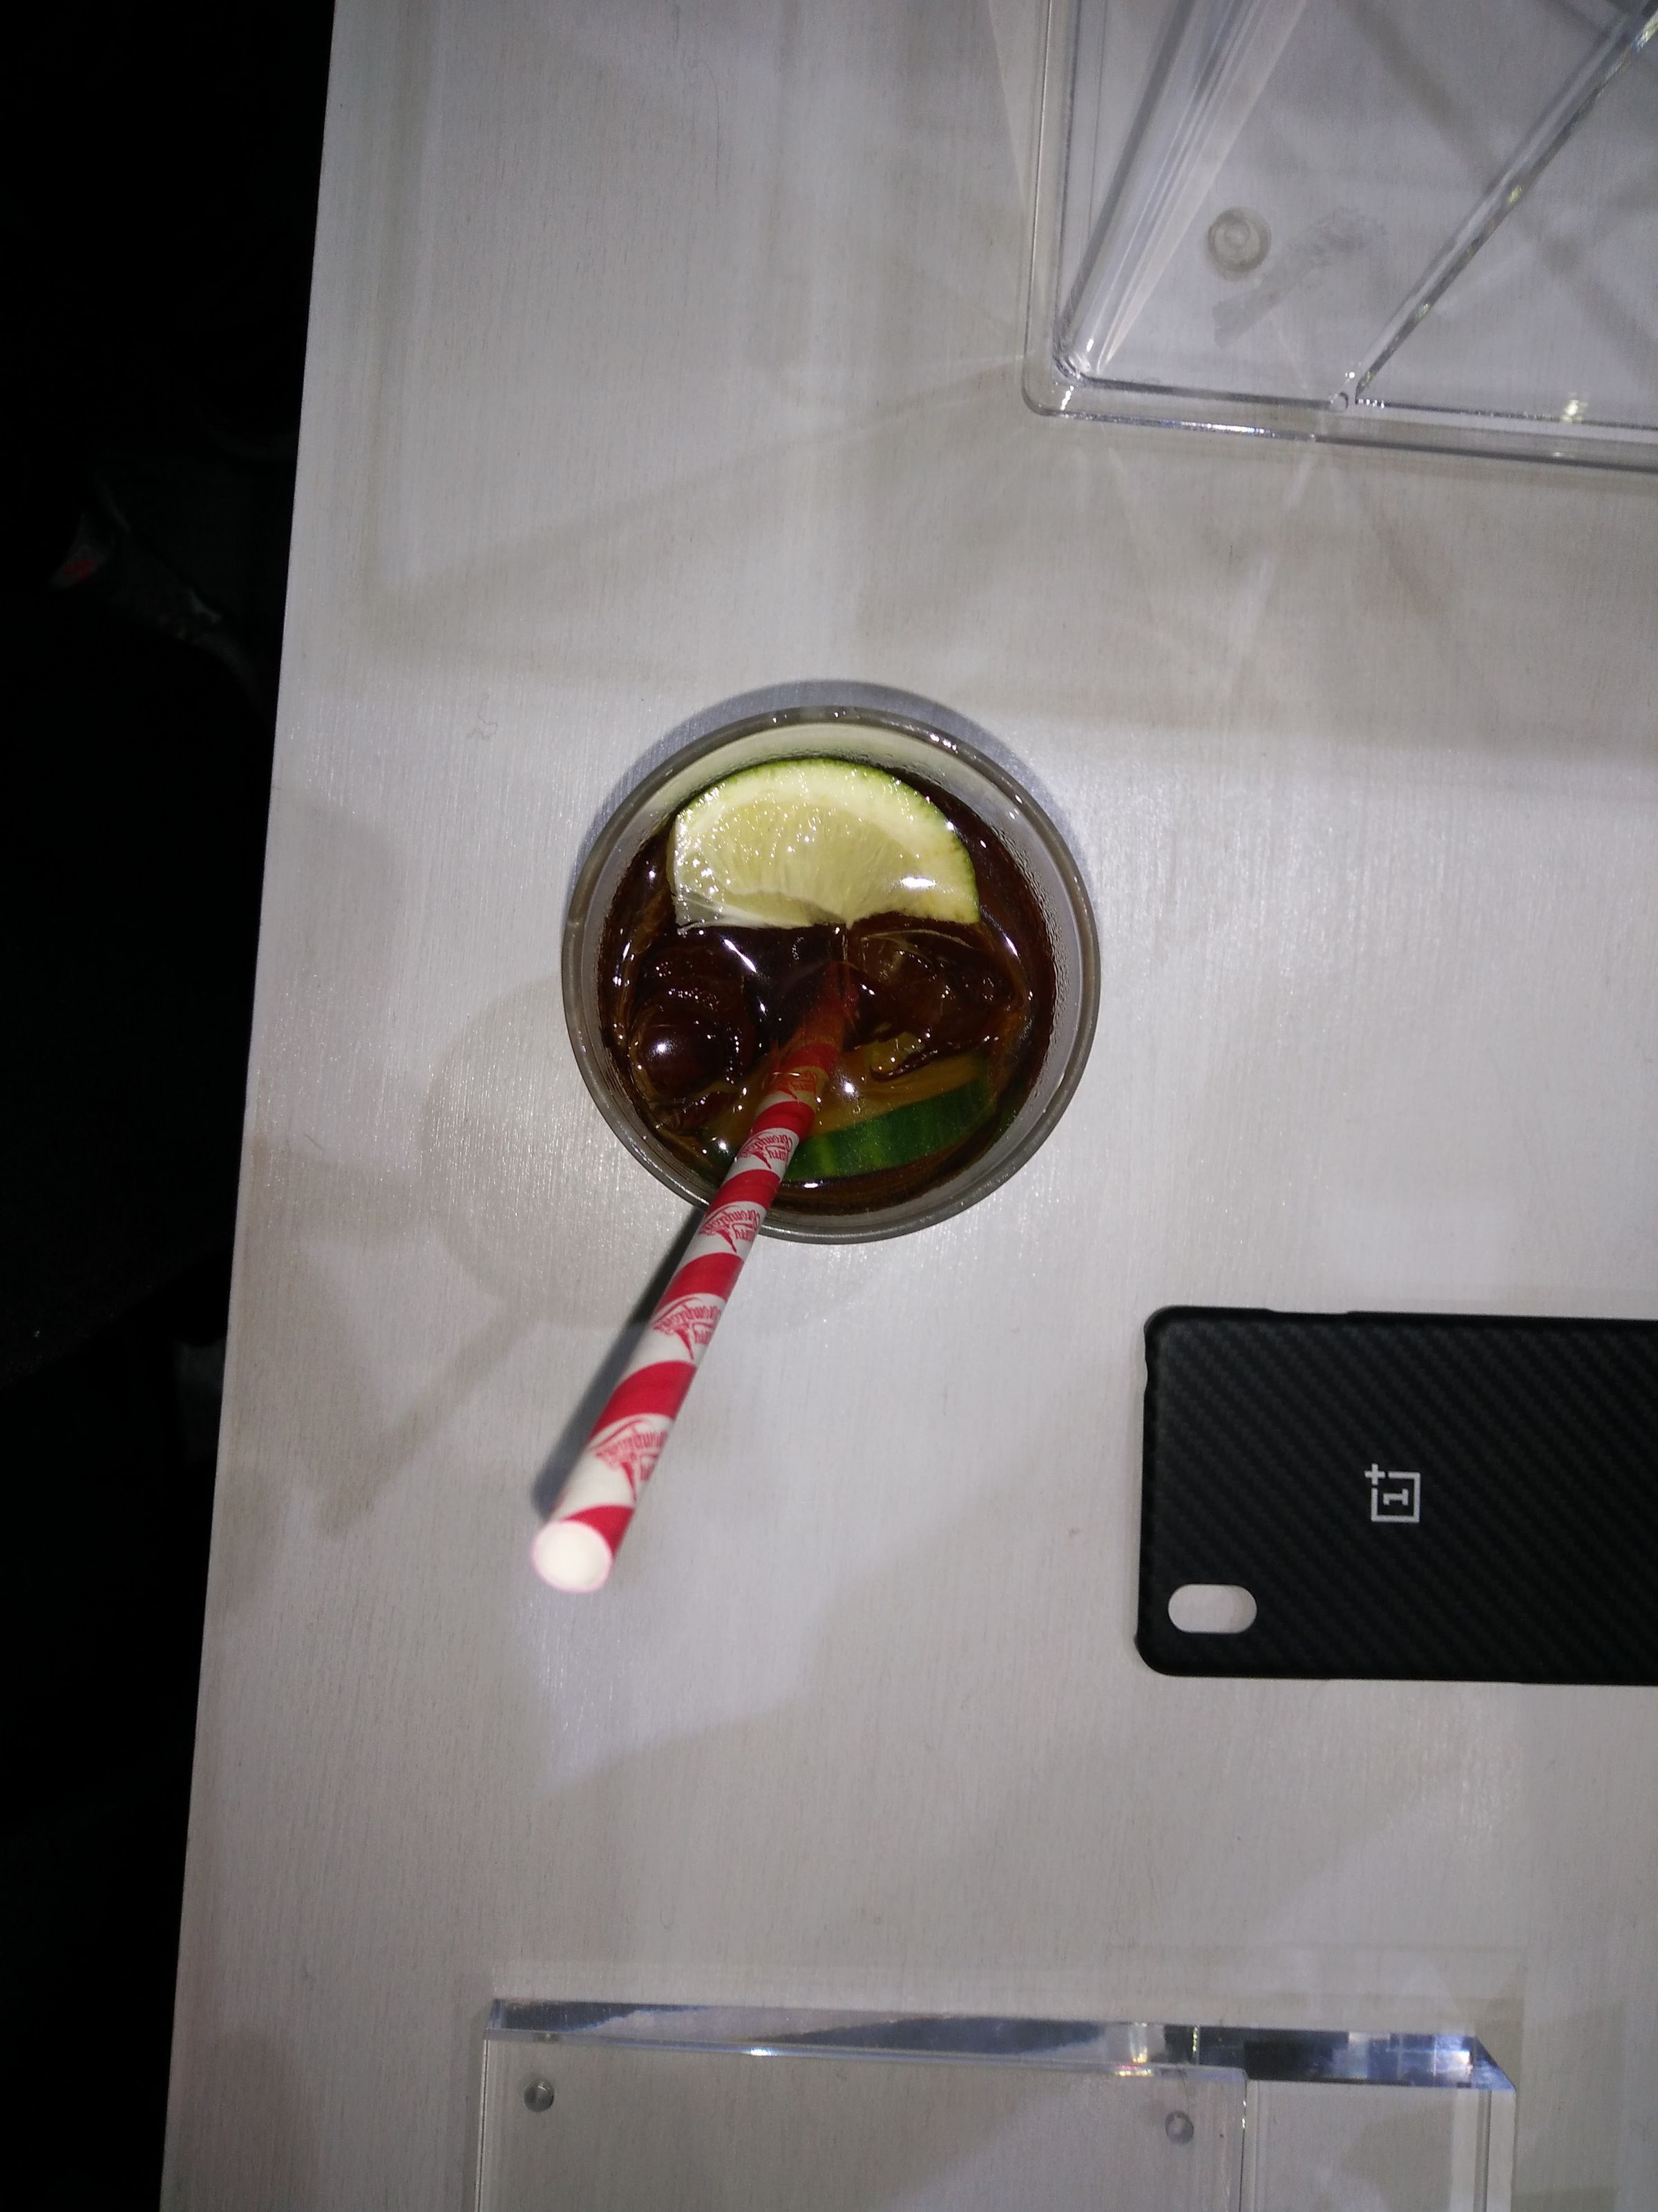 OnePlus X camera sample photos